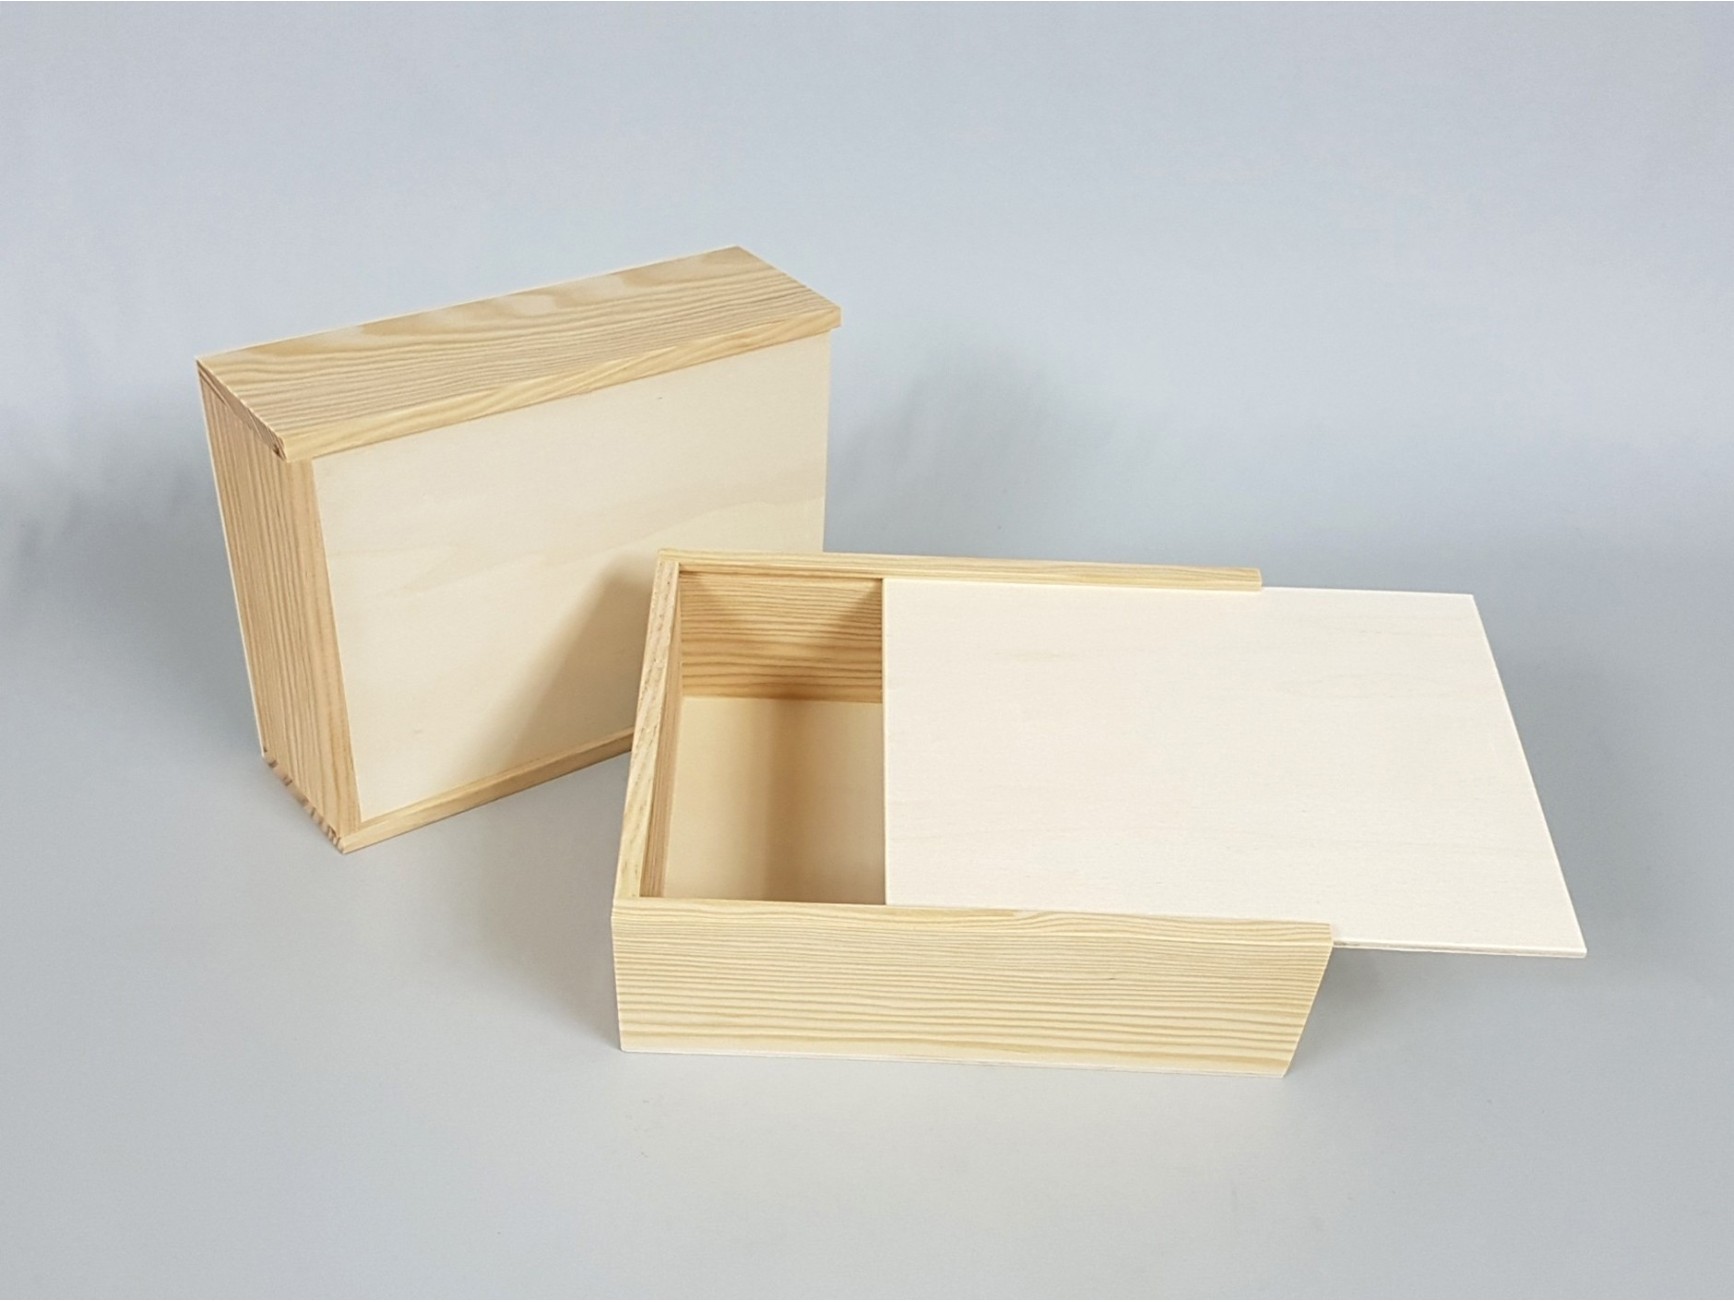 Caja de madera pino 22x22x12 cm. c/tapa corredera Marco Ref.99 - Mabaonline